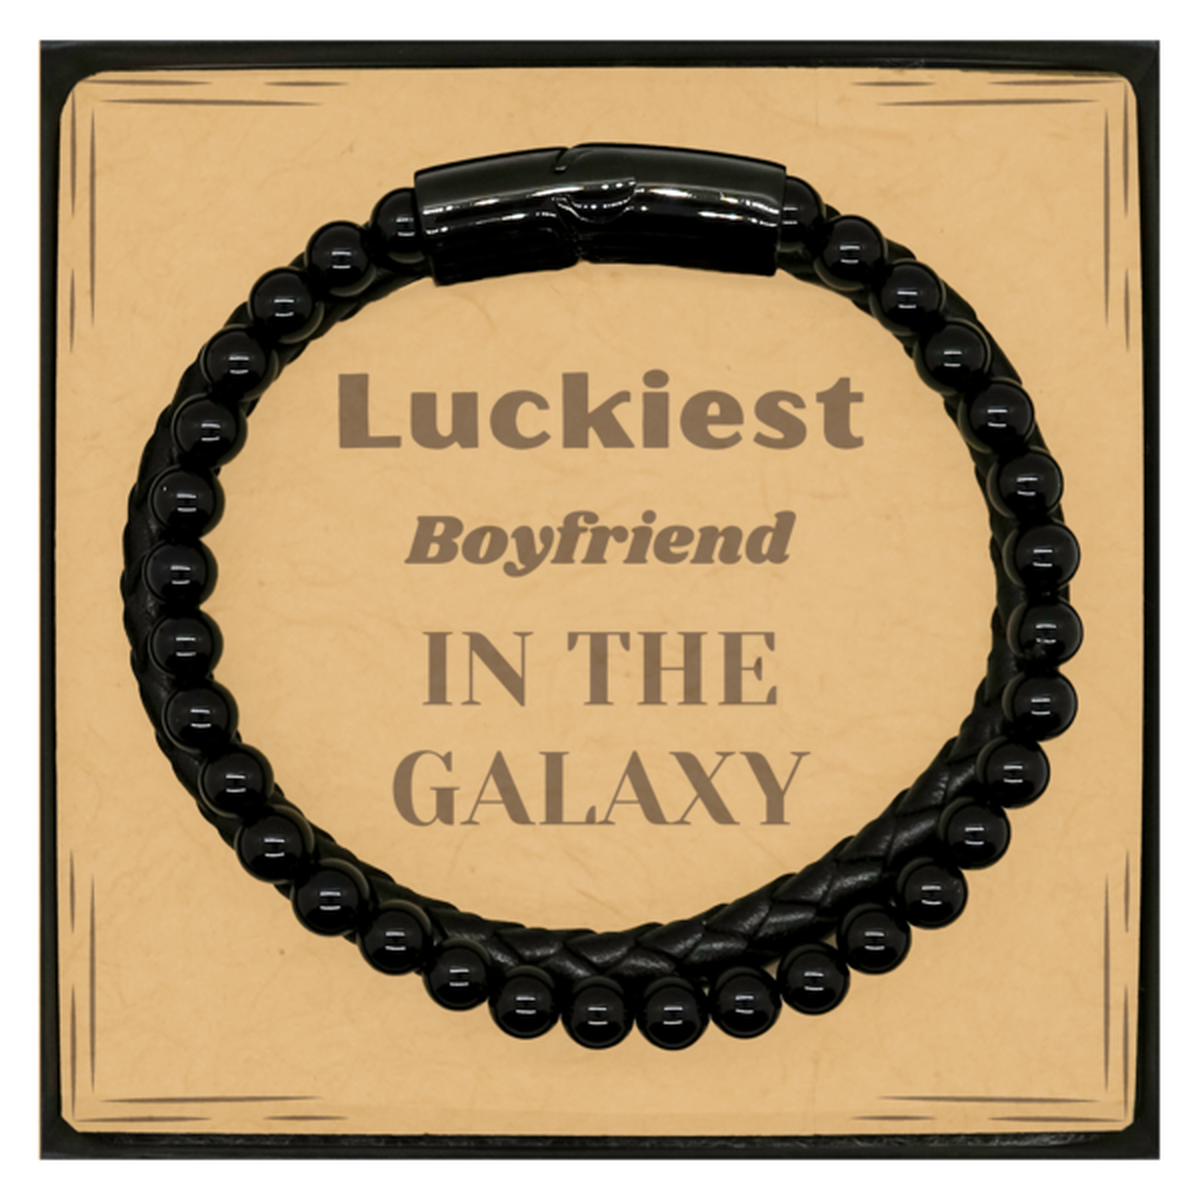 Luckiest Boyfriend in the Galaxy, To My Boyfriend Message Card Gifts, Christmas Boyfriend Stone Leather Bracelets Gifts, X-mas Birthday Unique Gifts For Boyfriend Men Women